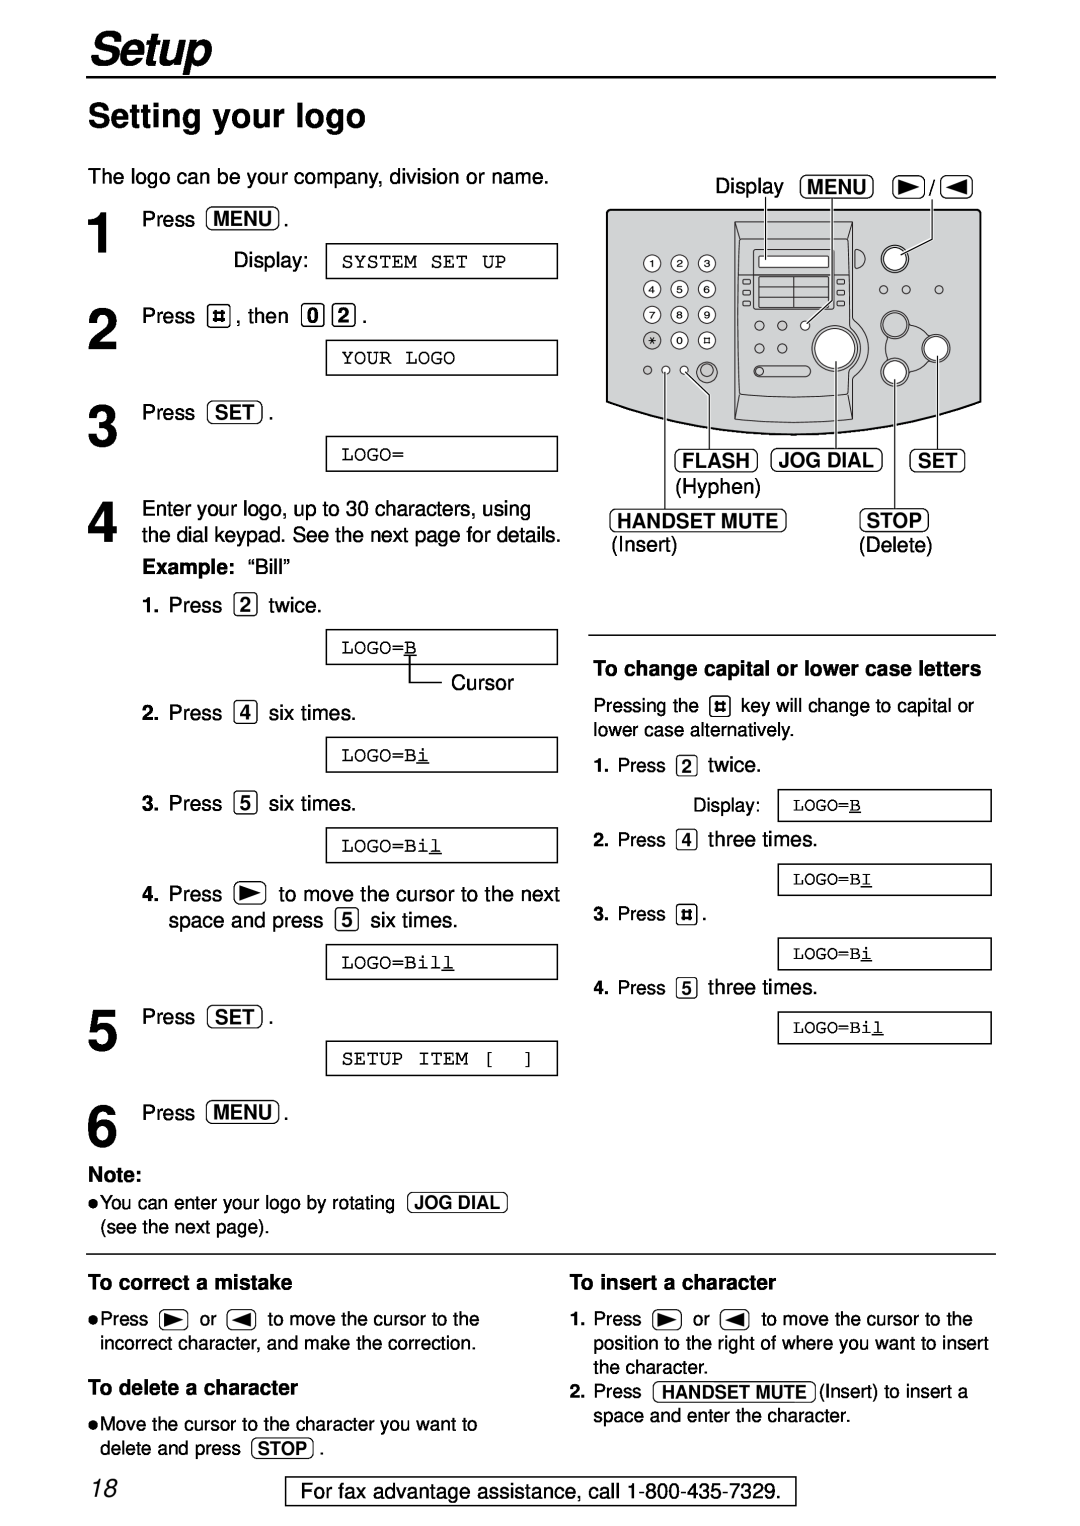 Panasonic KX-FL501 manual Setting your logo, Setup, Menu, Flash, Jog Dial, Hyphen, Handset Mute, Stop, Example “Bill” 